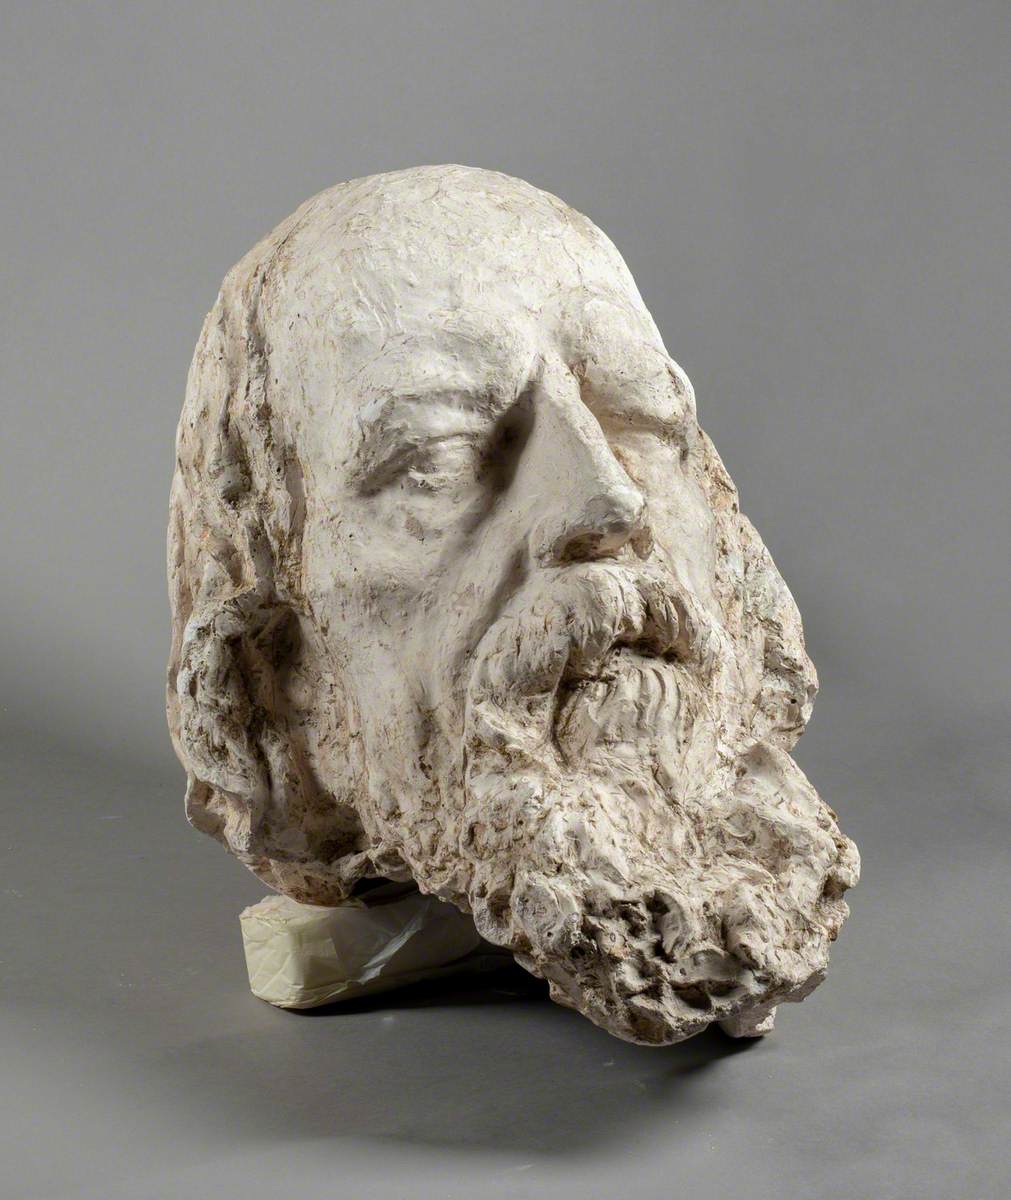 Tennyson (1809–1892)